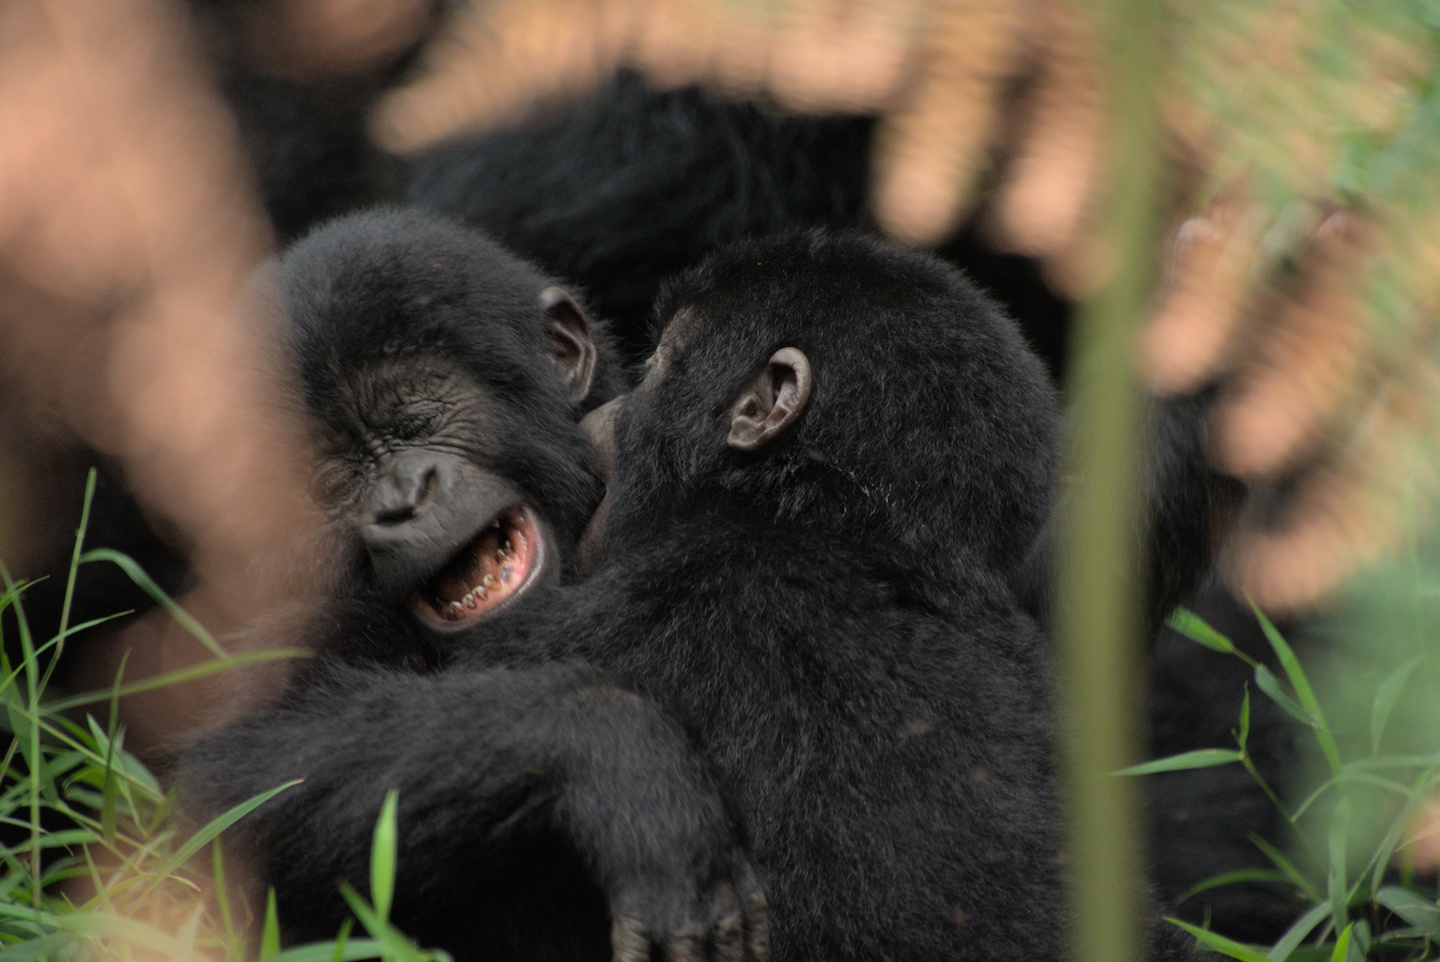 baby gorillas
fighting